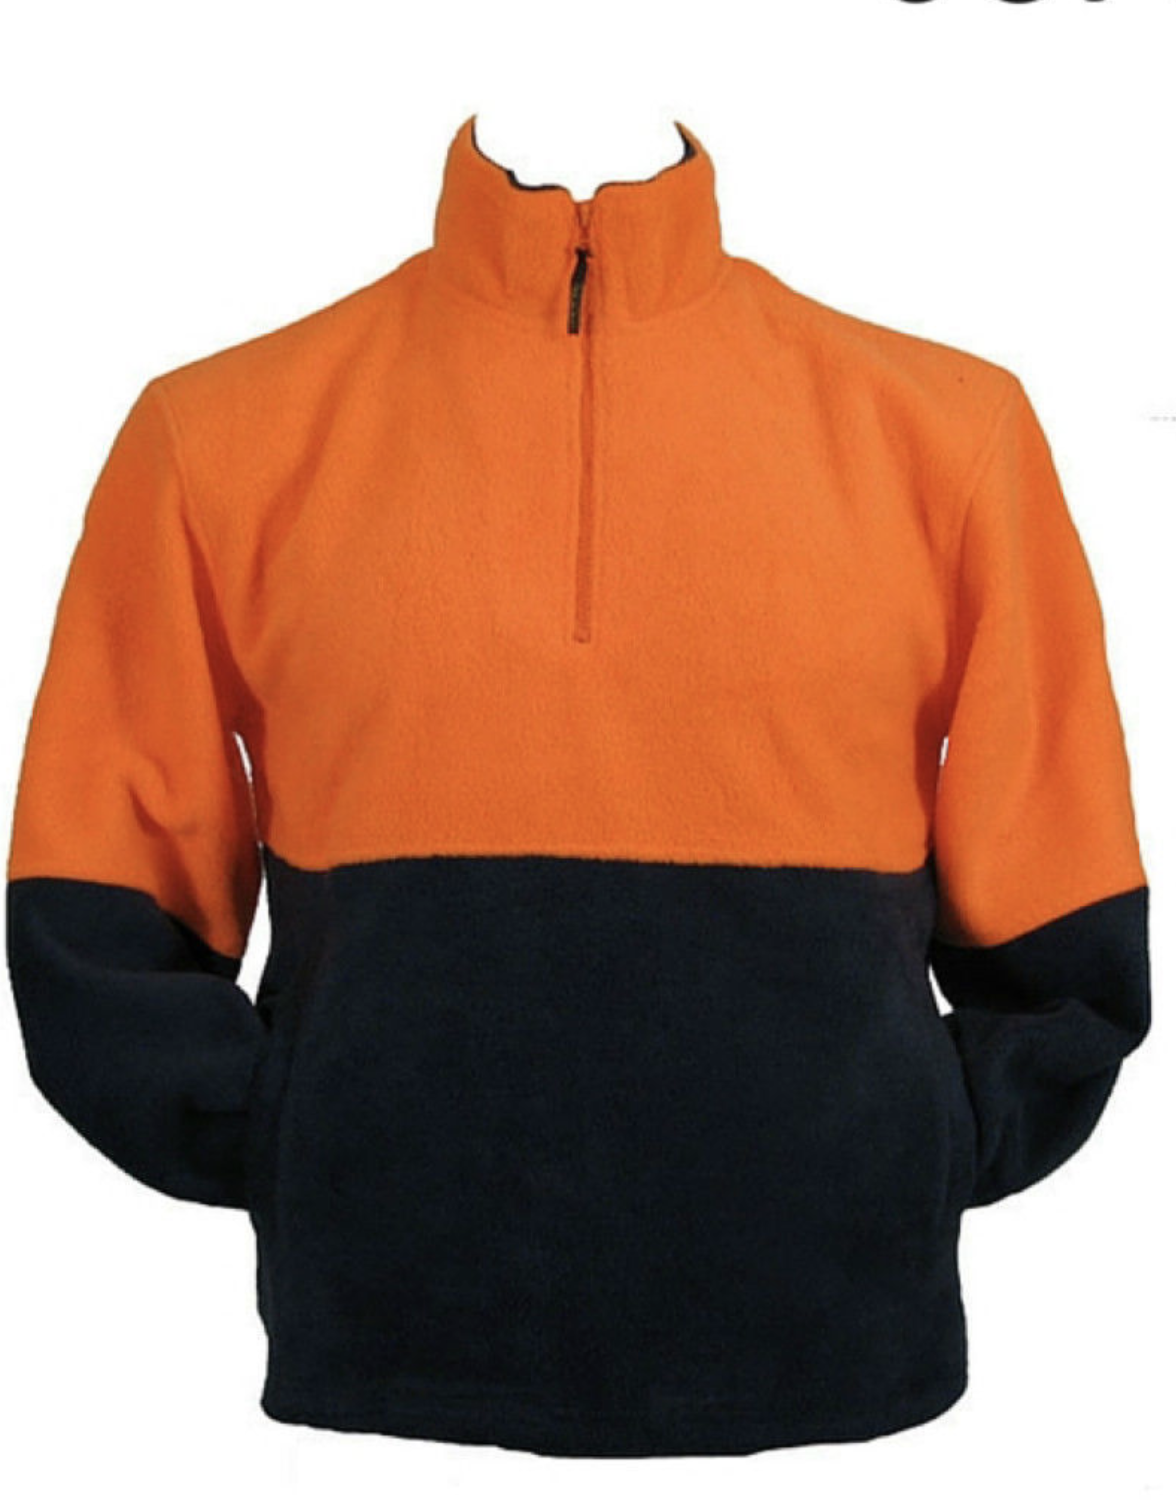 HI VIS POLAR FLEECE Jumper 1/2 Half Zip Safety Workwear Fleecy Jacket Unisex - Orange - XXL